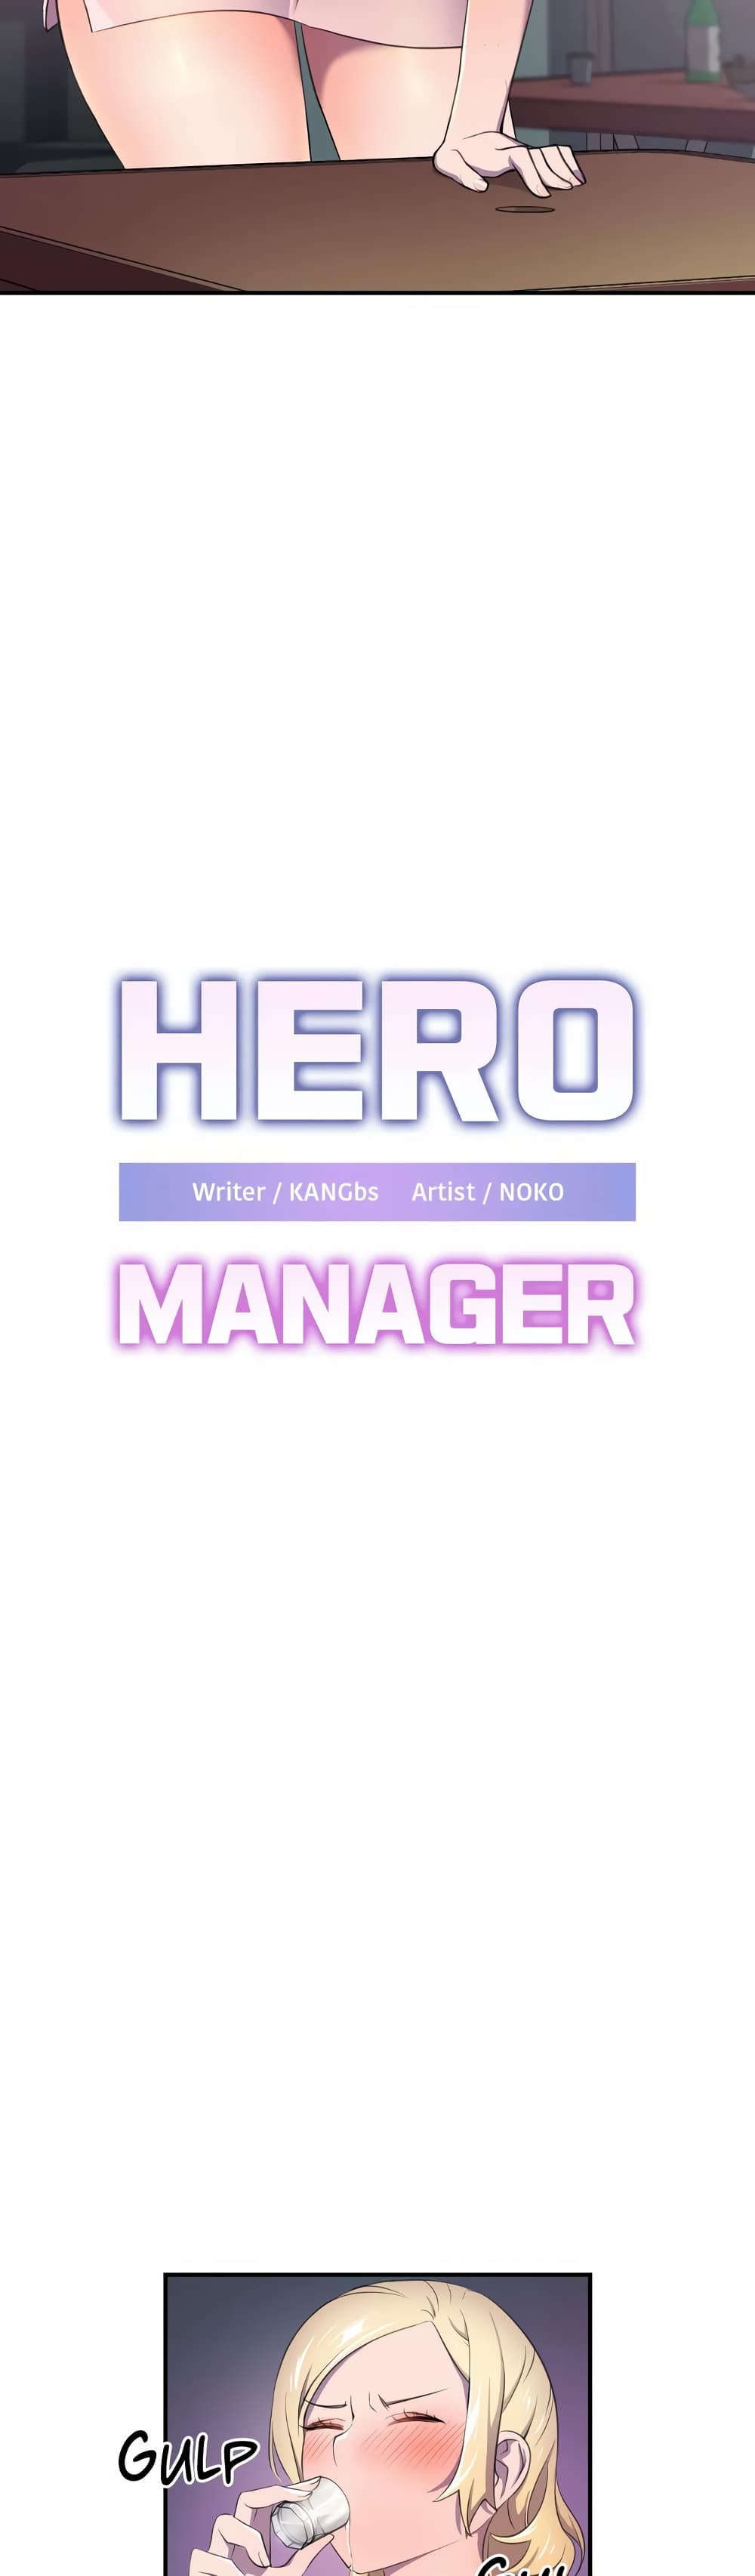 Hero Manager3 (12)